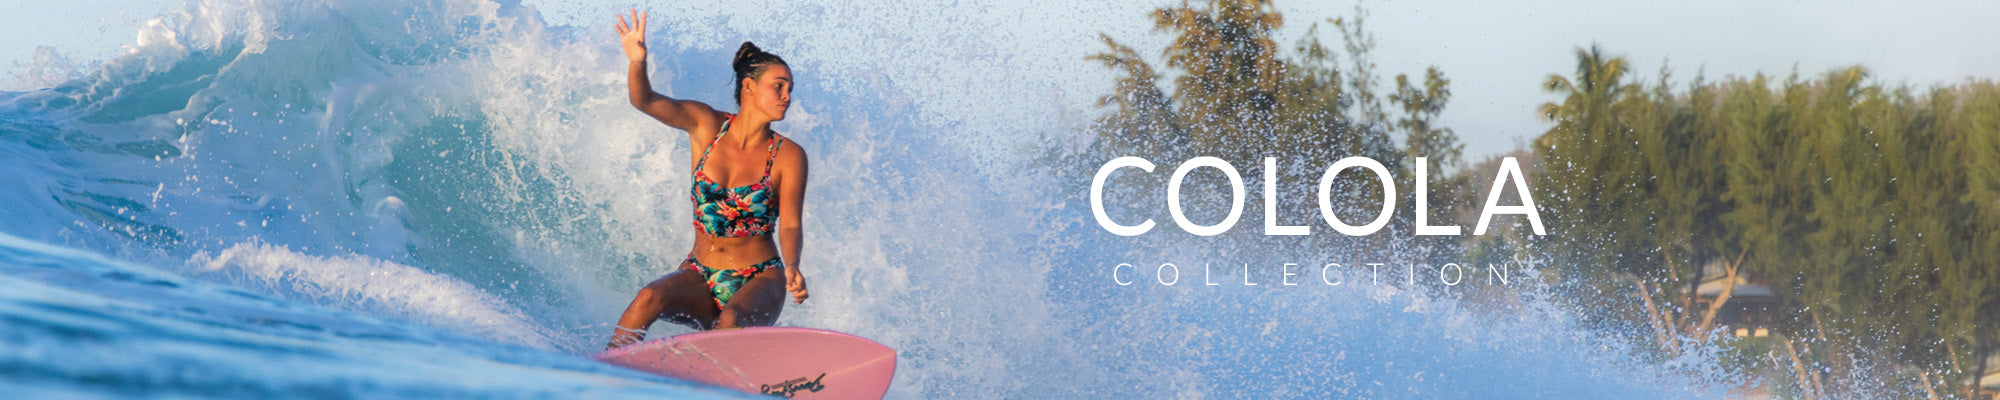 Women's Swimwear: Colola Collection